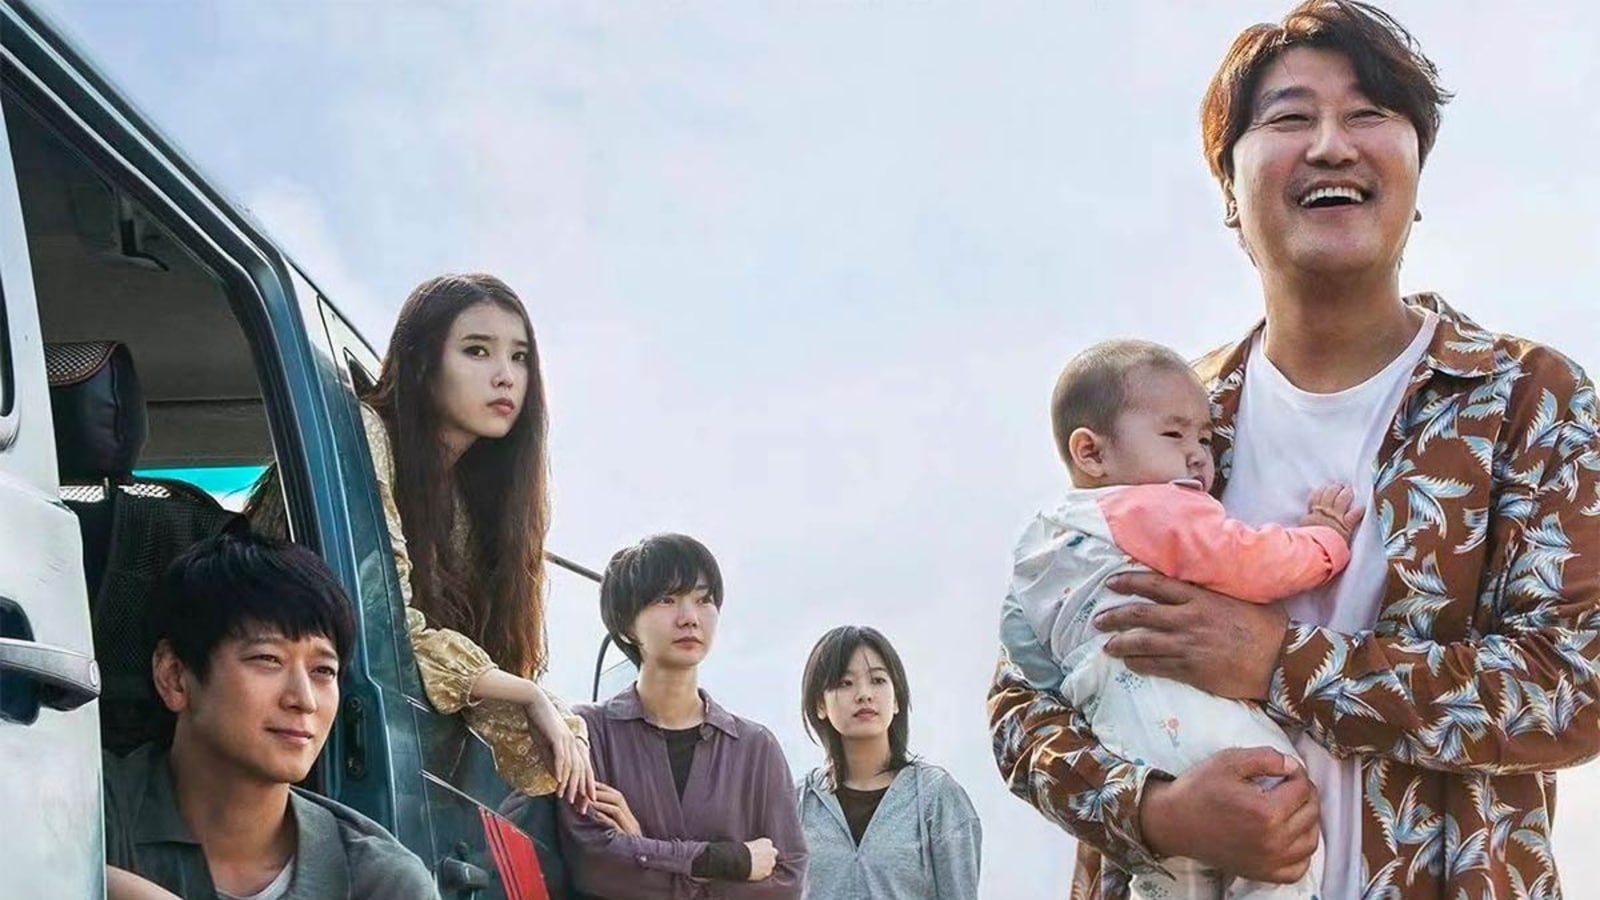 Broker movie review Korean drama assembles oddball 'family' to protect